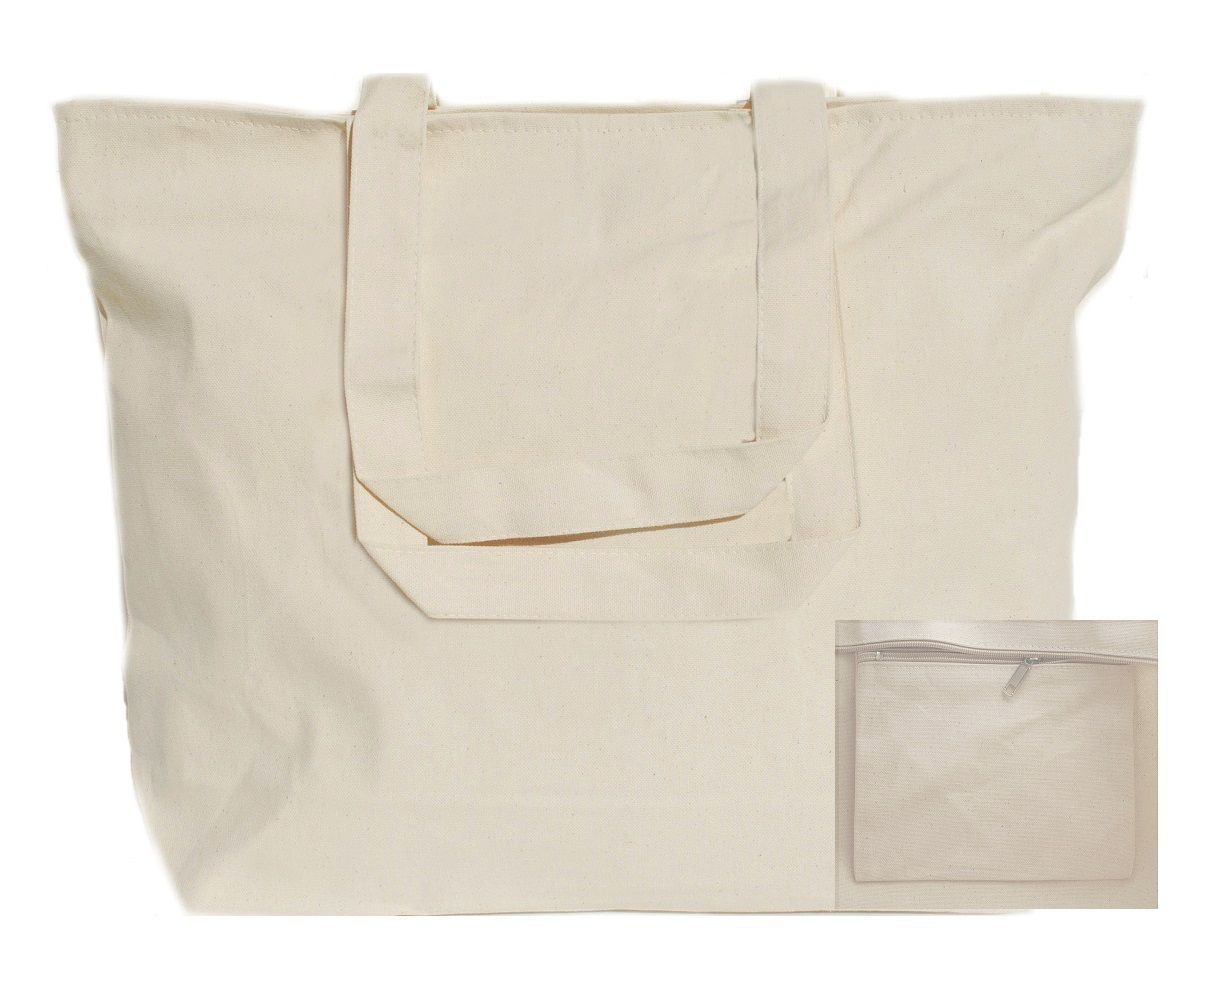 Buy Women's Canvas Tote Purse Shoulder Crossbody Bag Small Handbag Multi- pocket Top Handle Work Bags, Black, One Size at Amazon.in